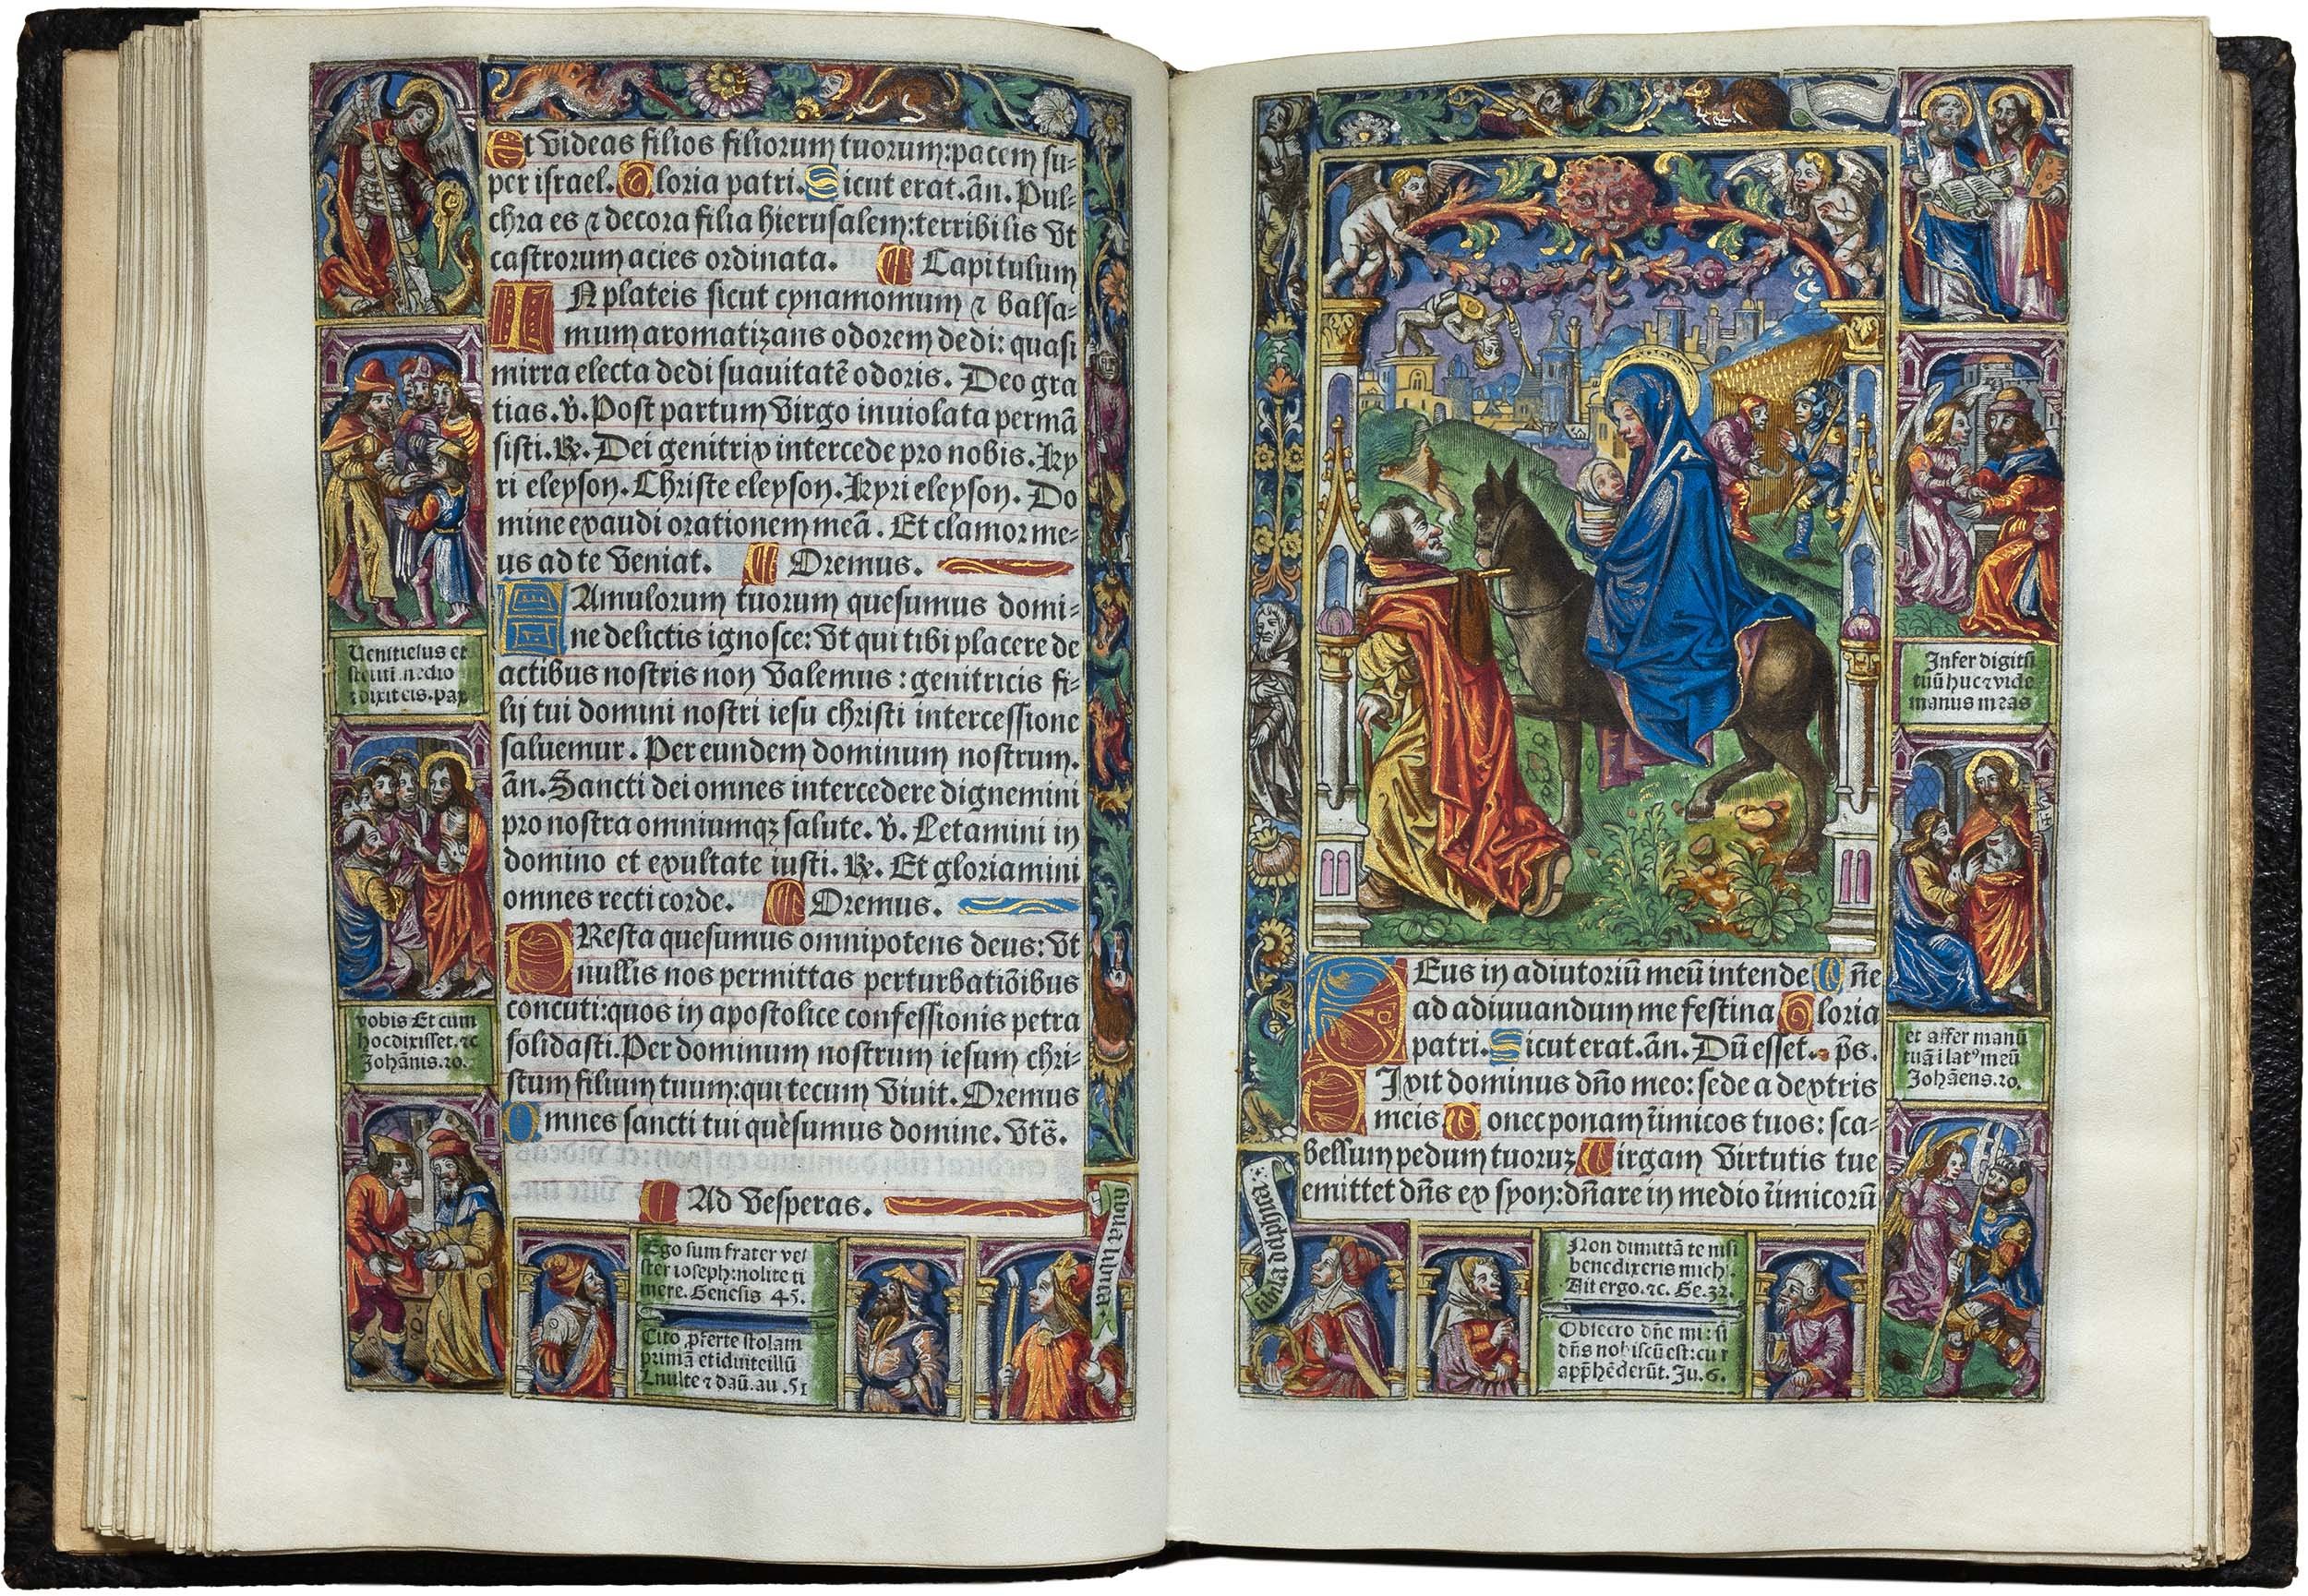 Printed-Book-of-Hours-10-january-1503-horae-bmv-kerver-remacle-illuminated-vellum-copy-schönborn-buchheim-35.jpg